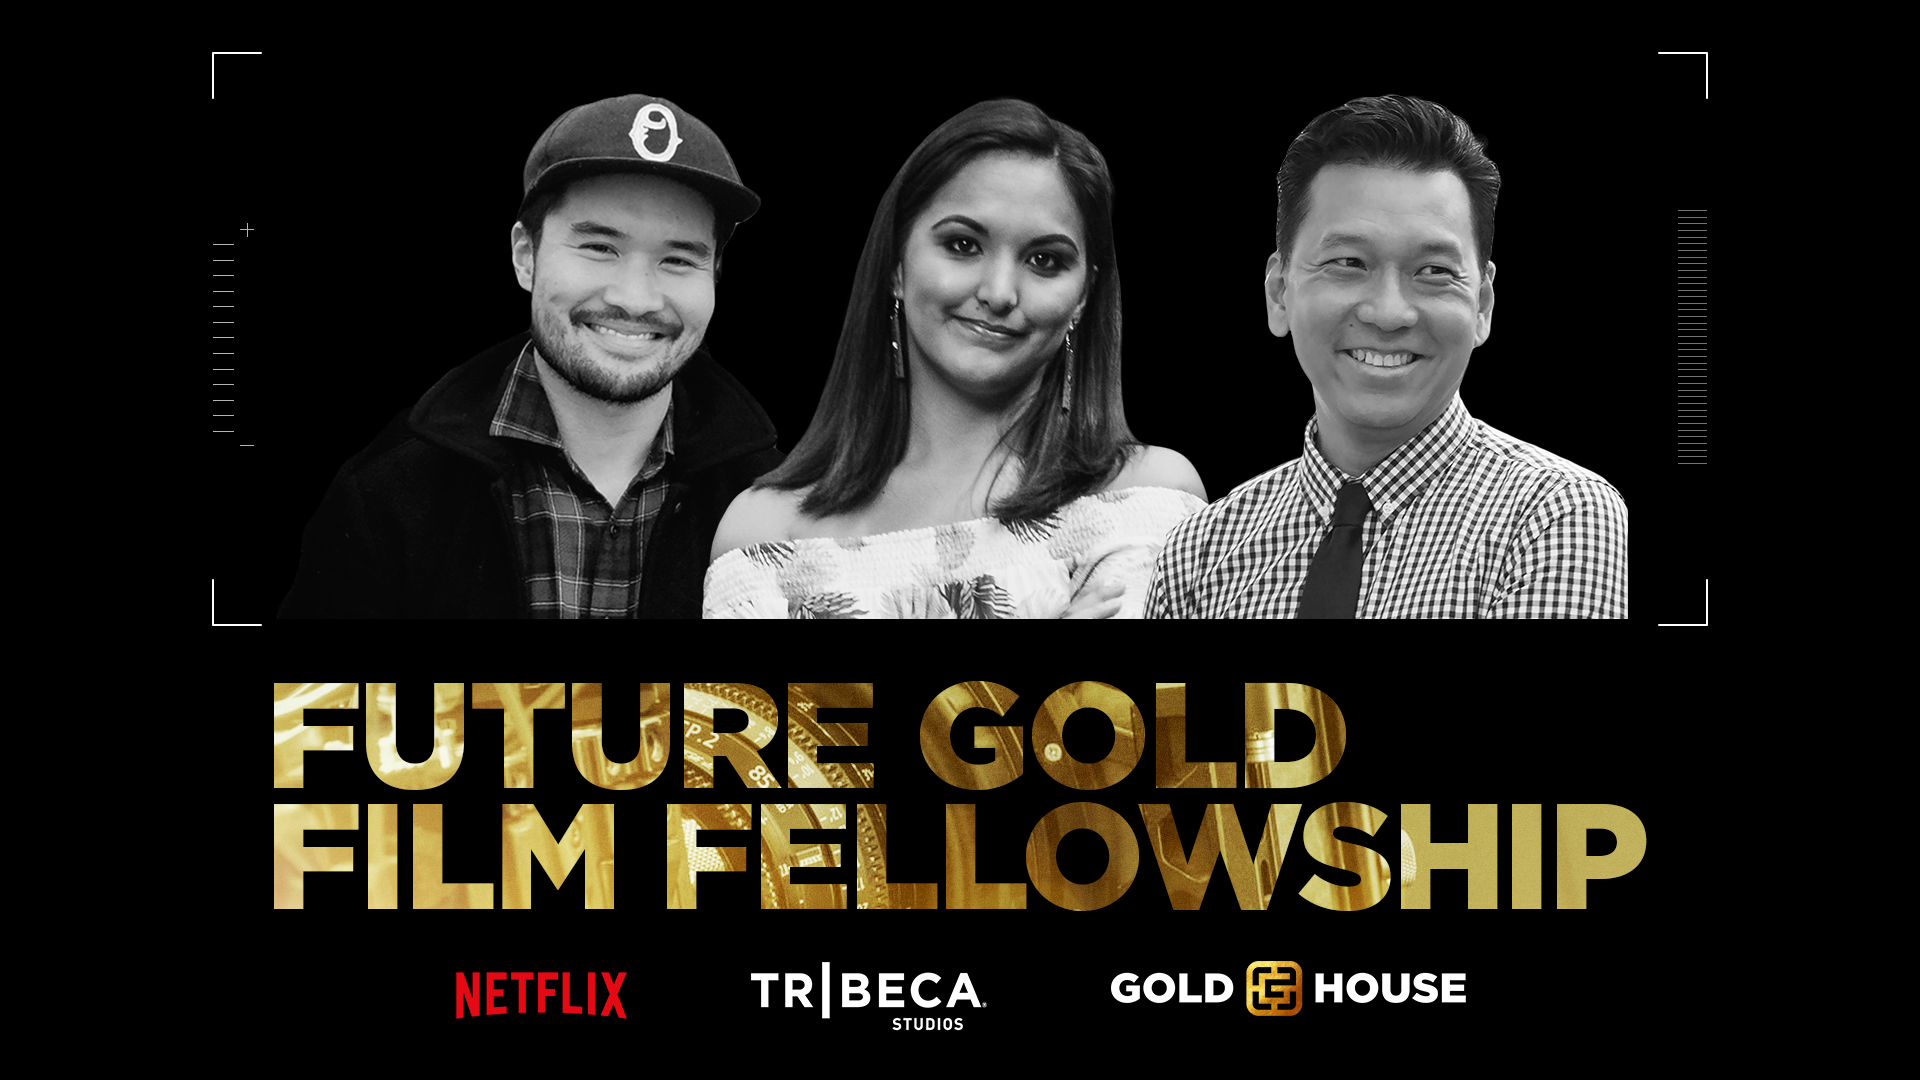 Meet the Inaugural Future Gold Film Fellowship Class - About Netflix